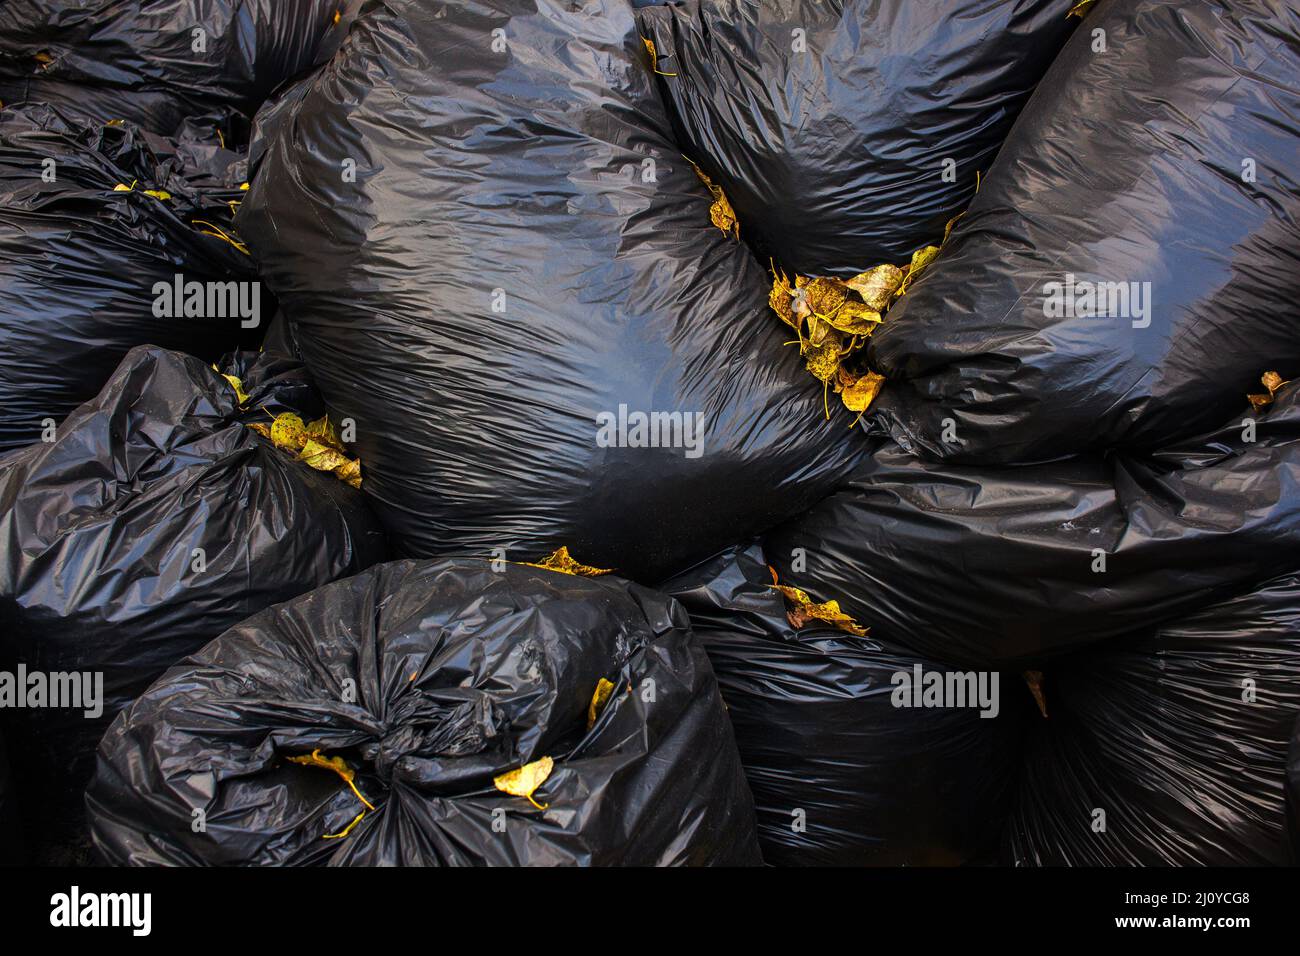 Black bags of garbage. Stock Photo